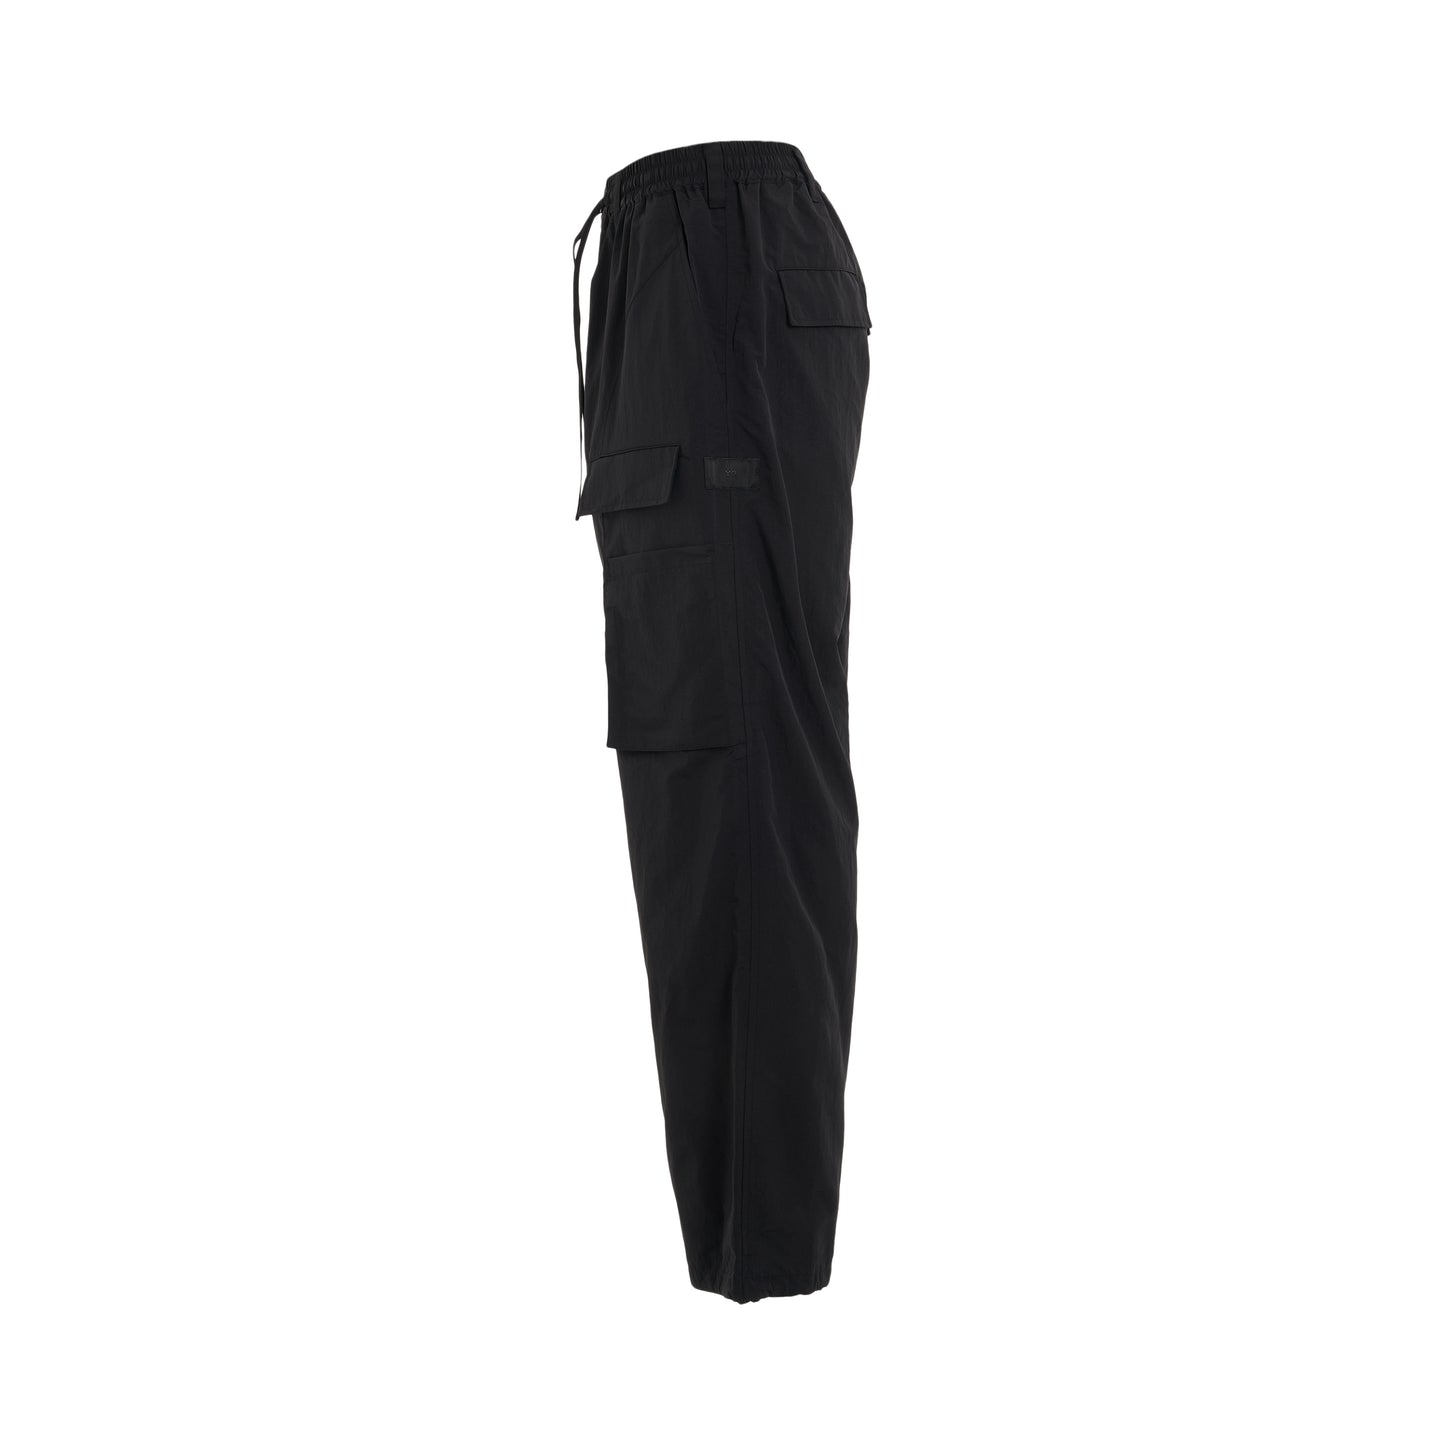 Crinkle Nylon Pants in Black